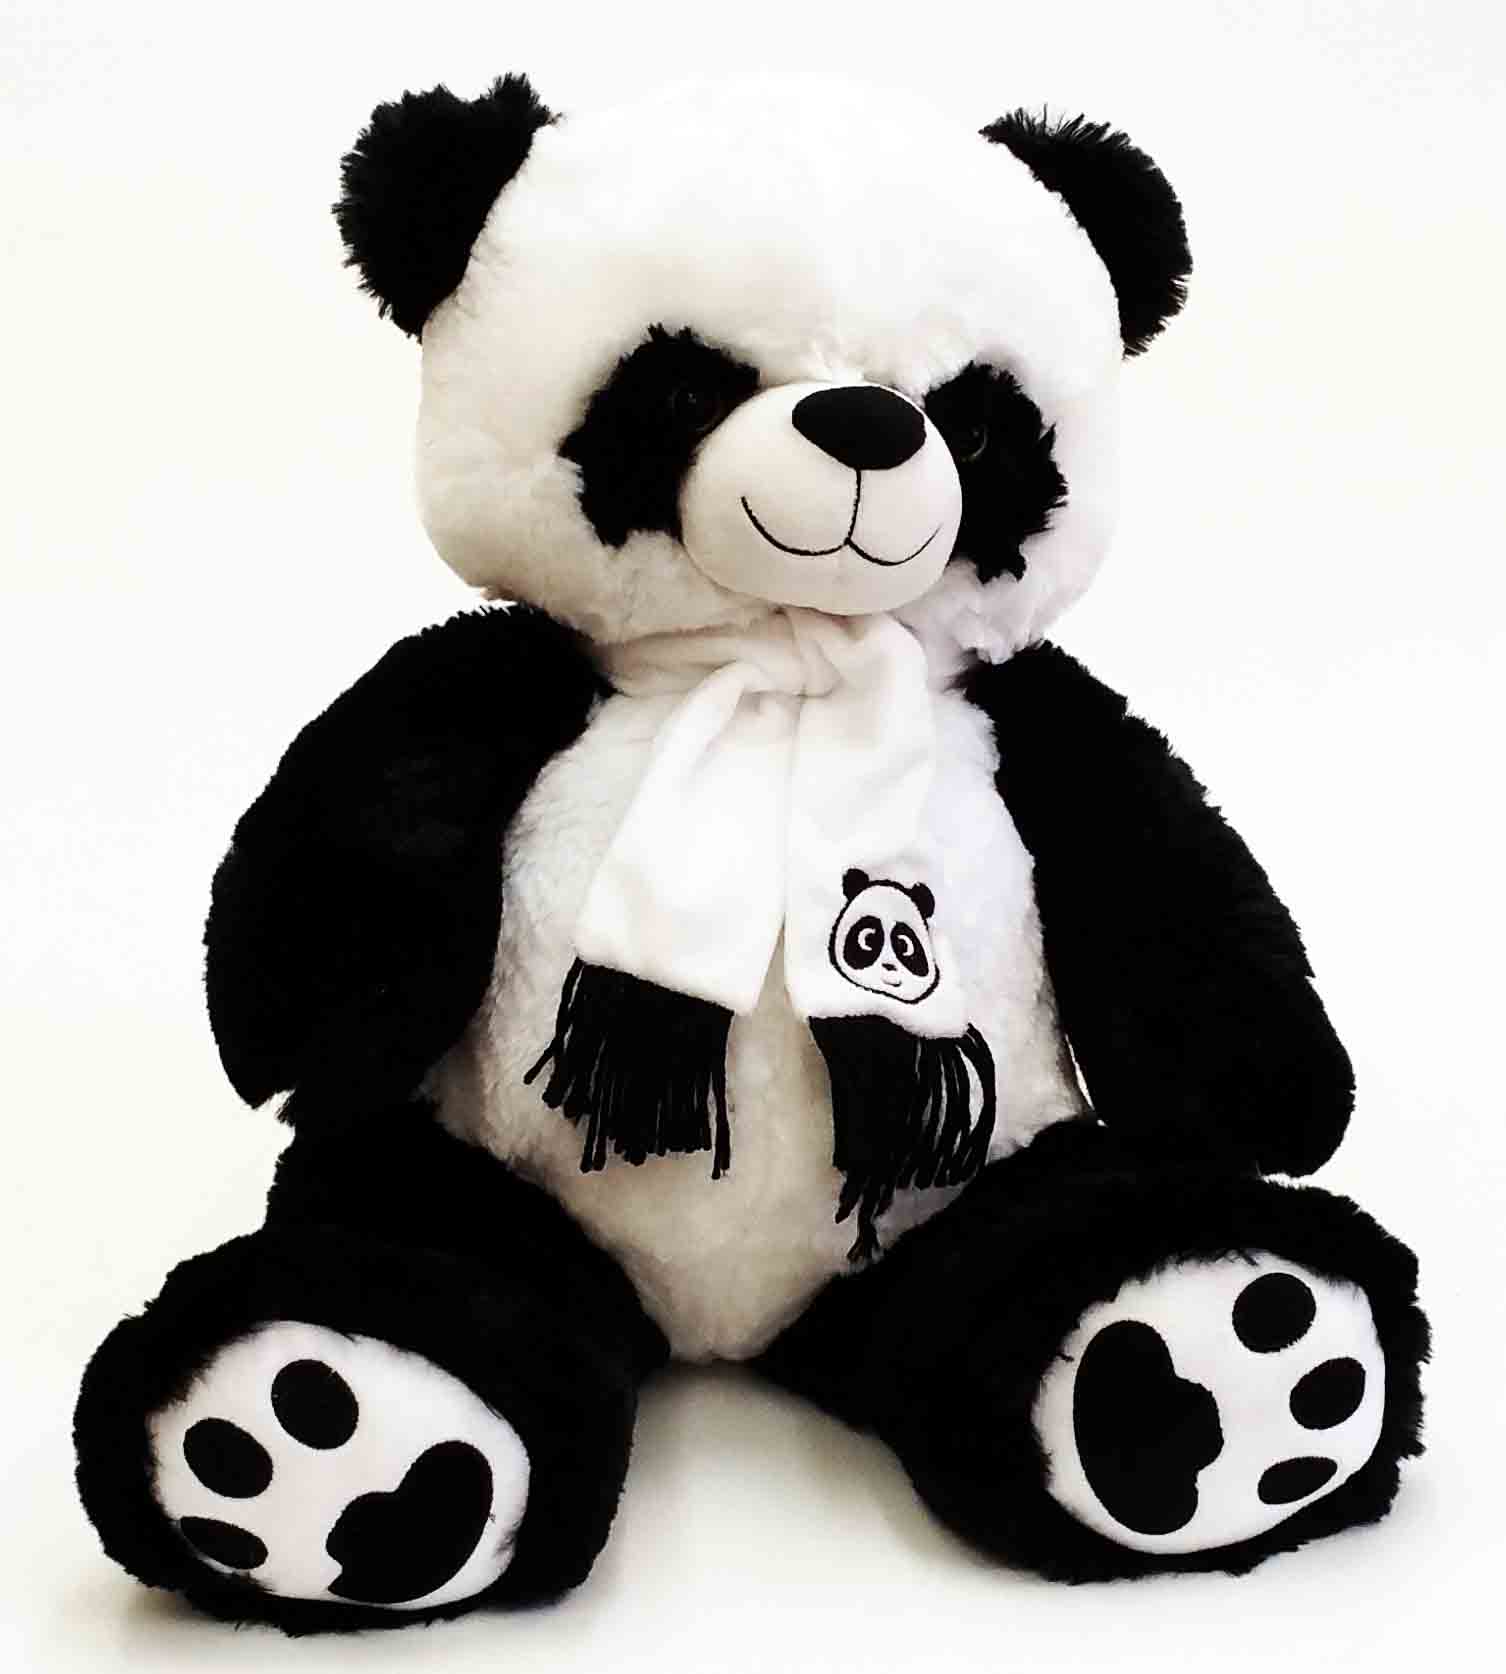 P749 - 15" Plush Sitting Panda - 18.95 ea